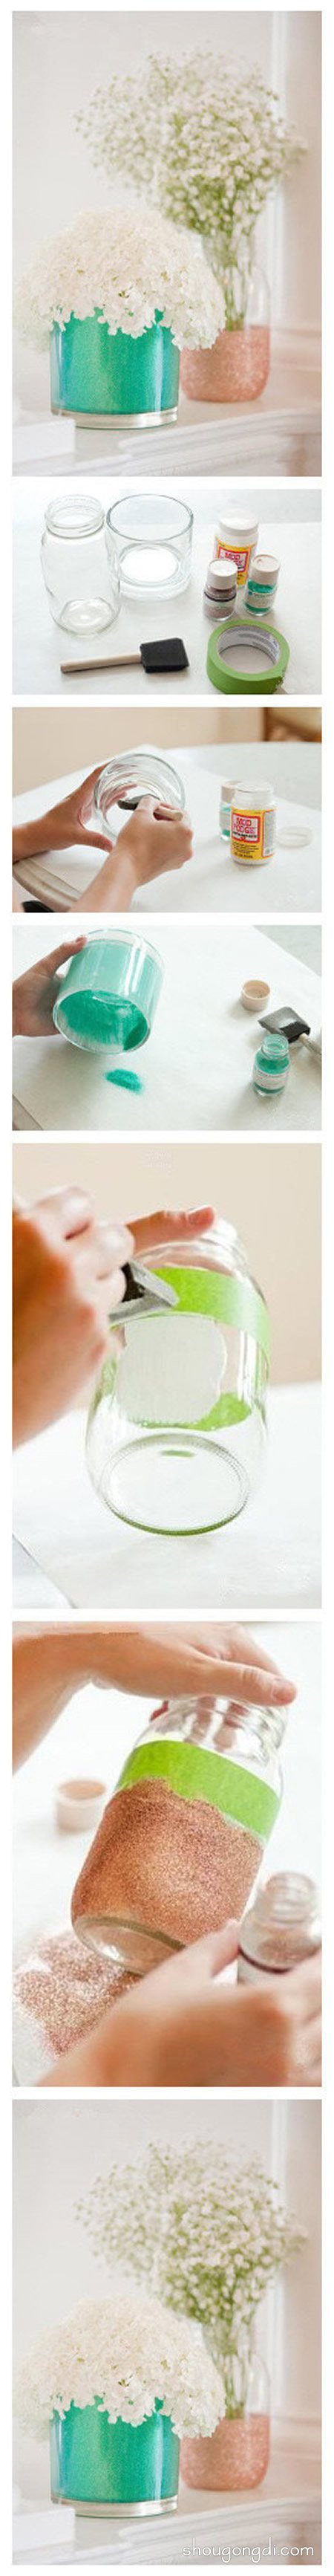 玻璃瓶做花瓶的方法 簡單玻璃瓶花瓶DIY制作 -  www.shougongdi.com